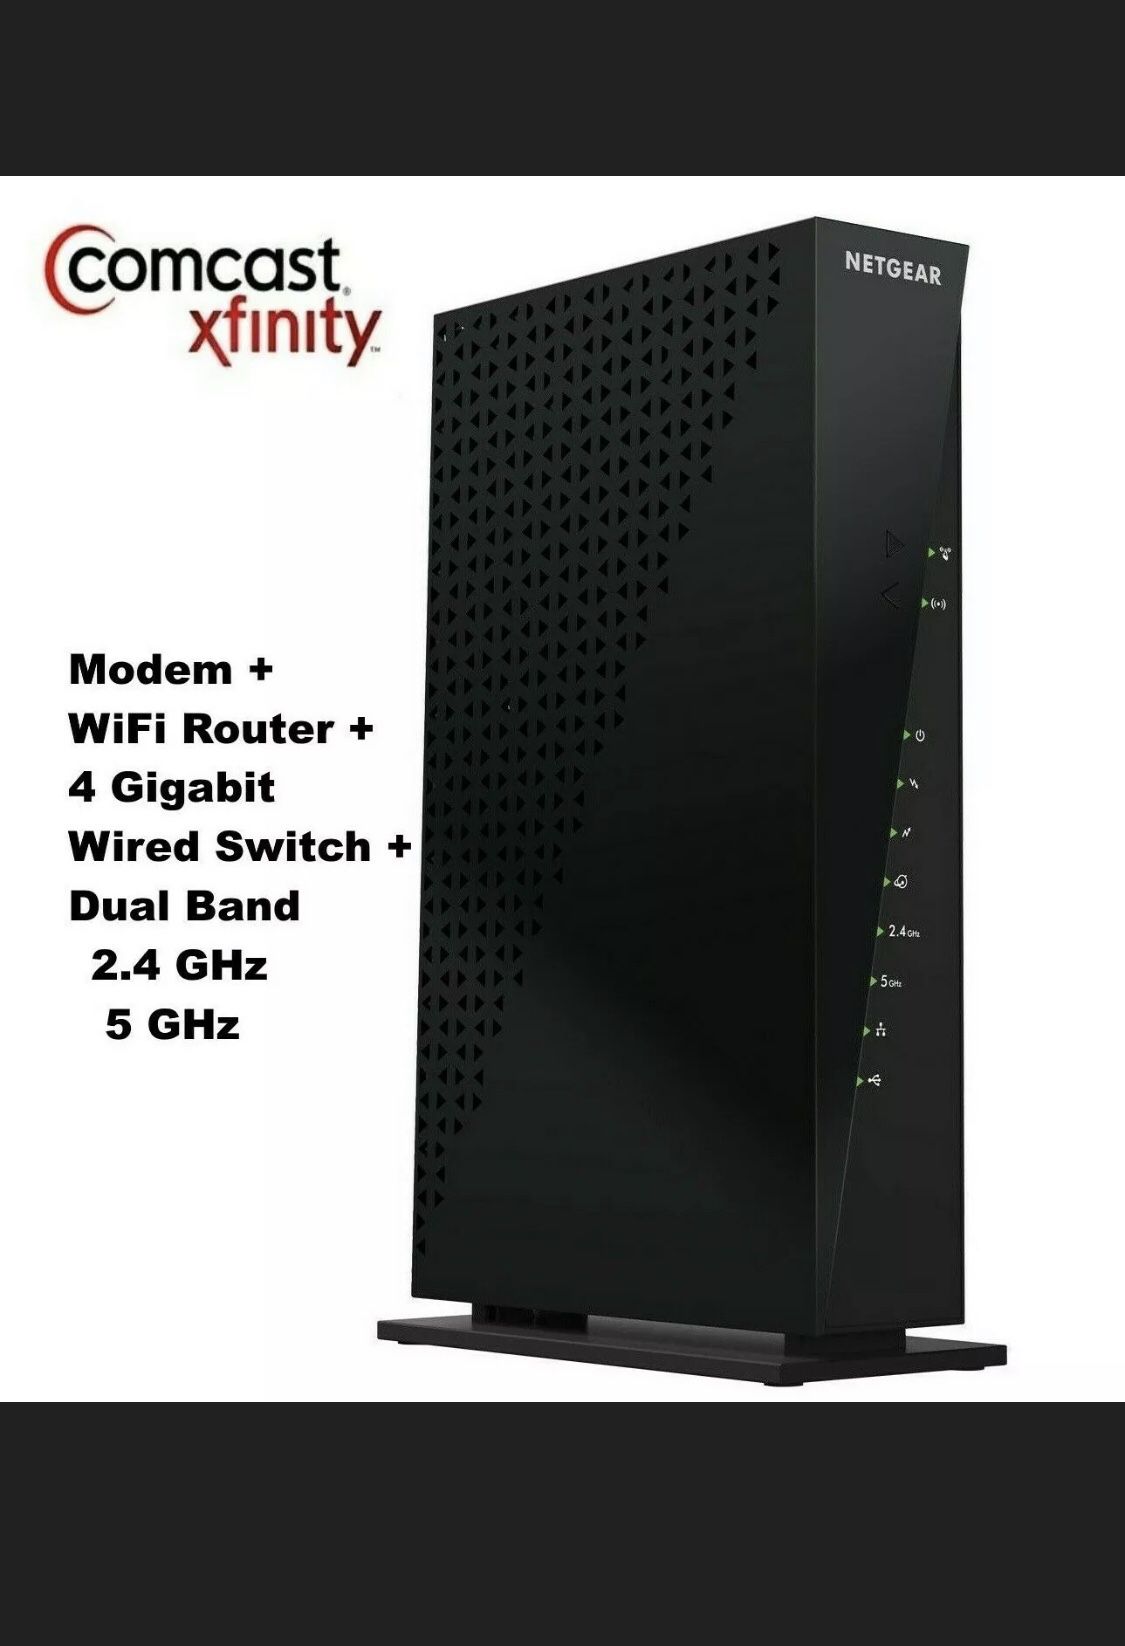 Netgear C6300 AC1750 WiFi Dual Band Cable Modem Gigabit Router XFINITY / COMCAST